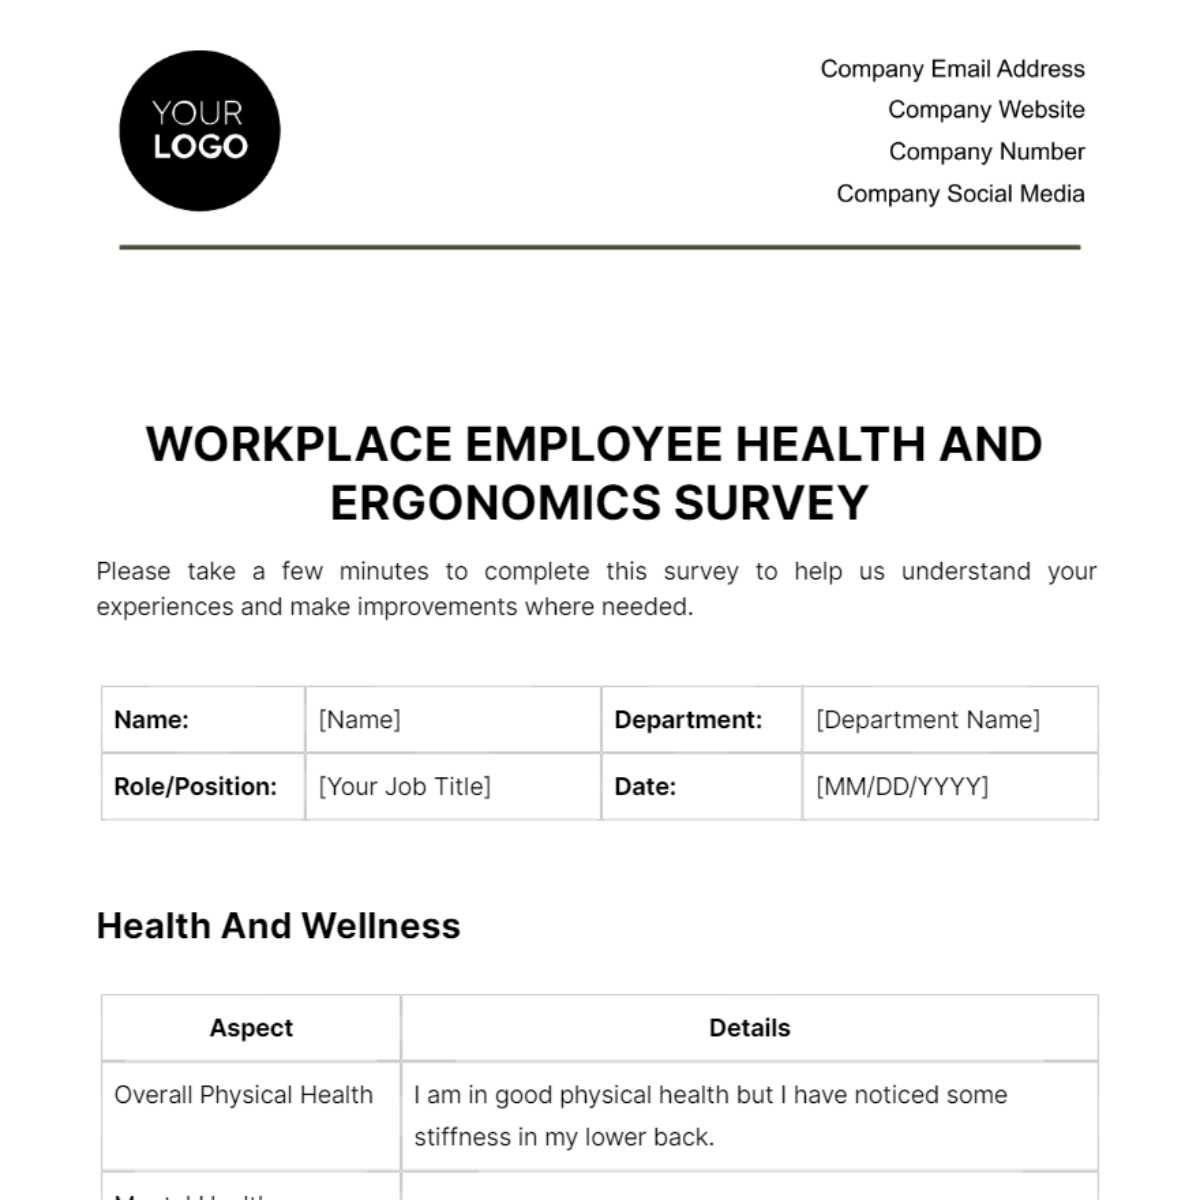 Workplace Employee Health and Ergonomics Survey Template